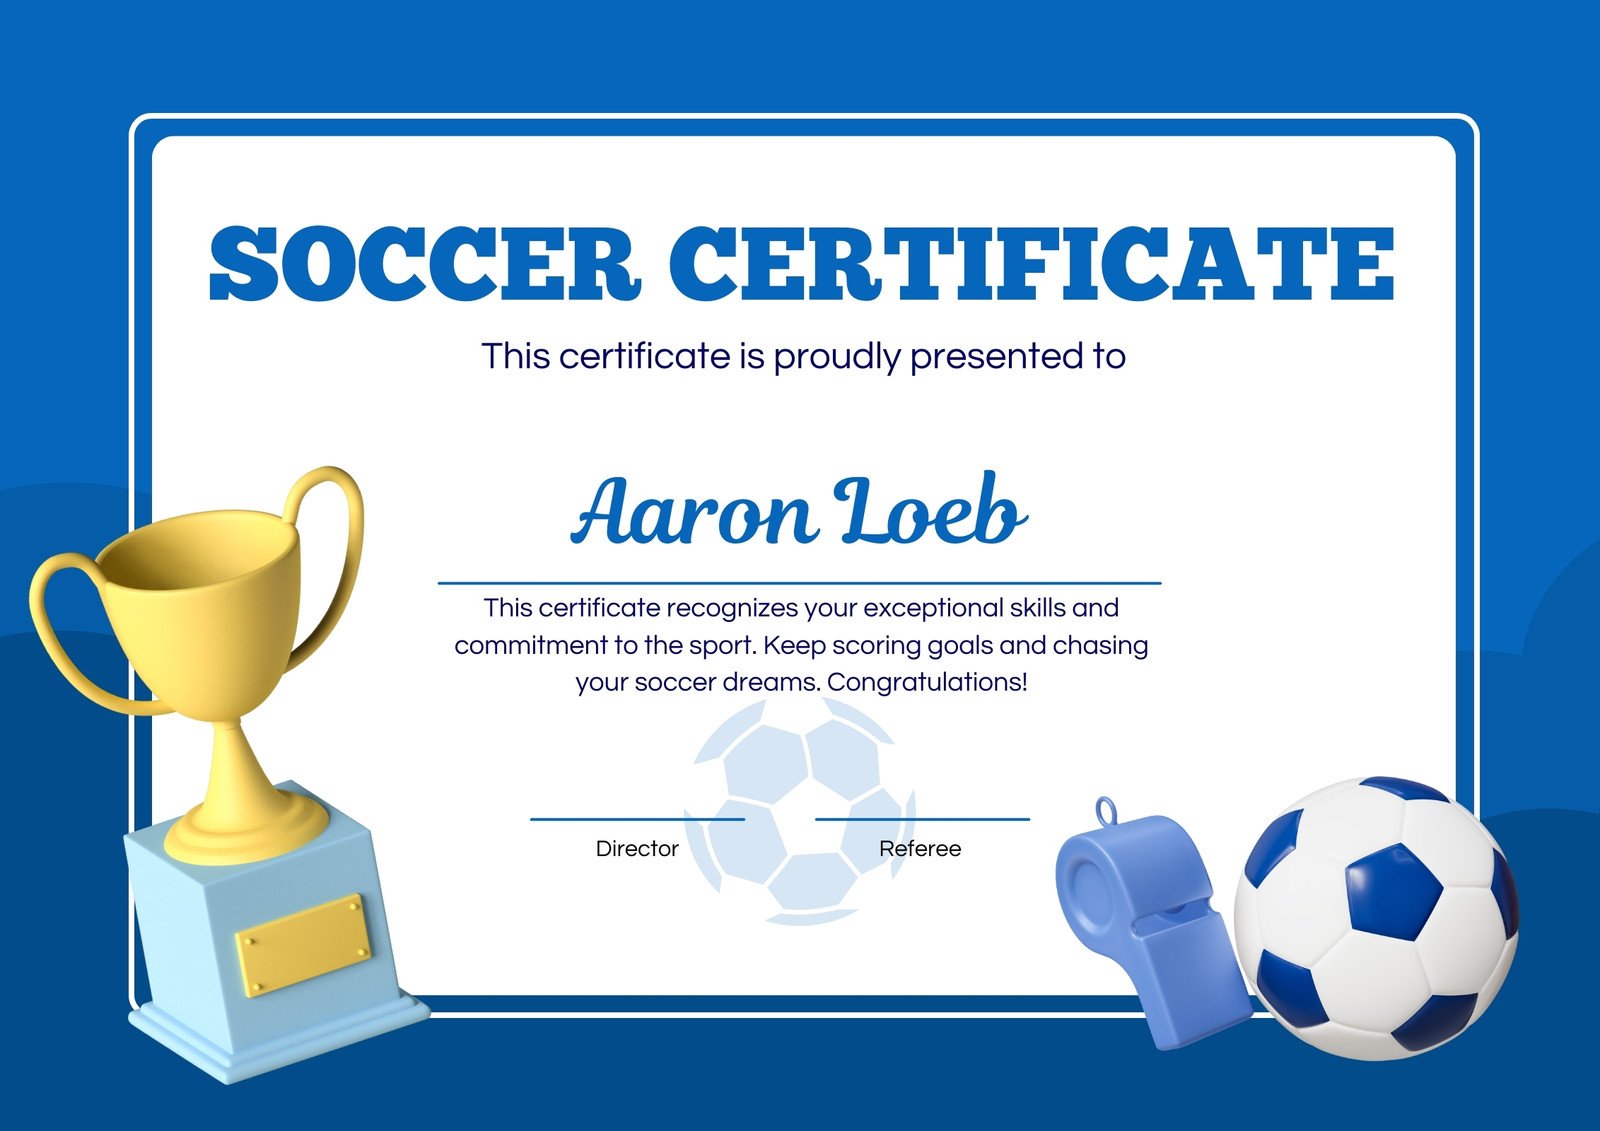 soccer certificates templates